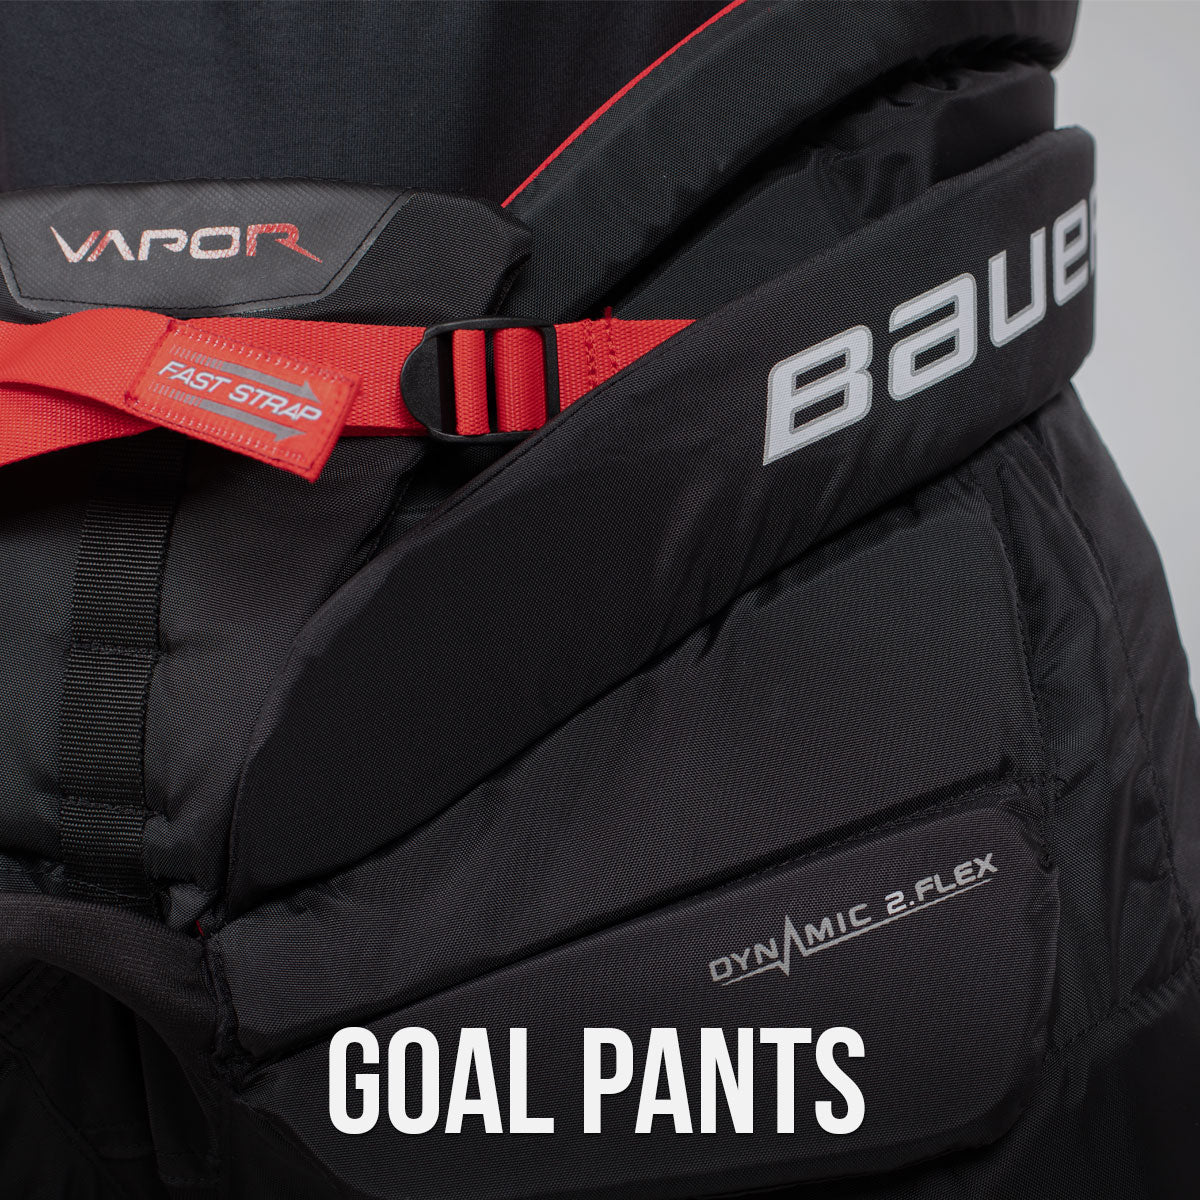 Bauer goal pants